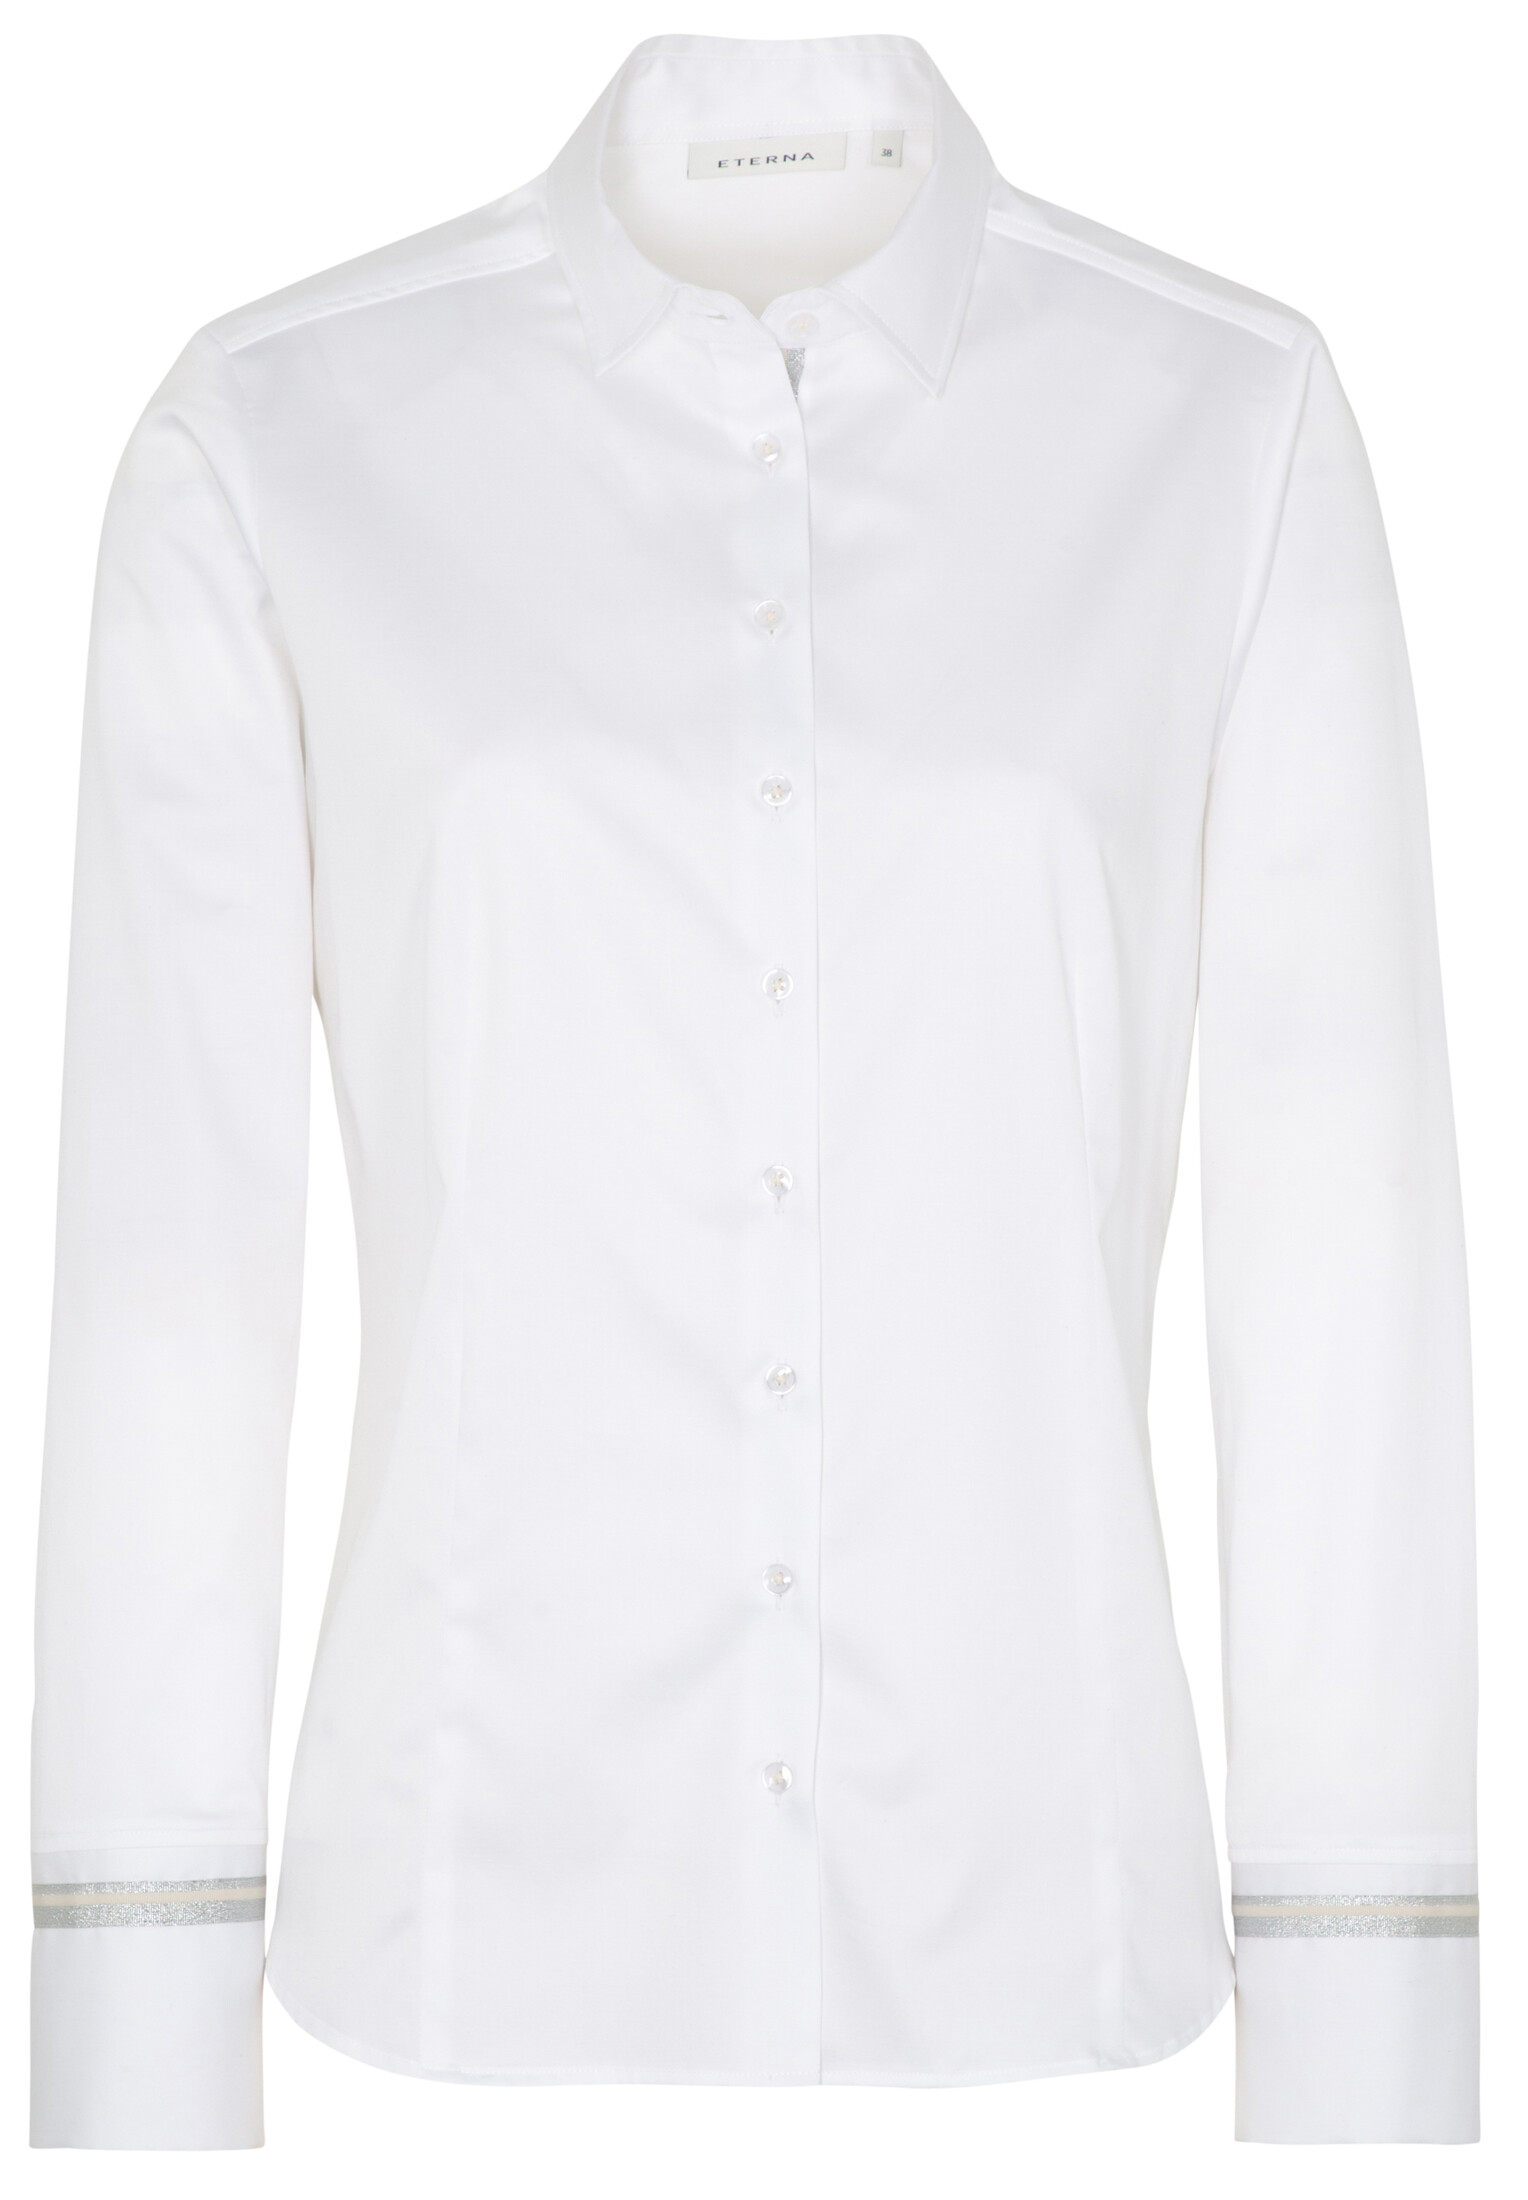 ETERNA REGULAR FIT Langarm Bluse weiß 5585-00-D928 | Regular Fit | Eterna |  Blusen | Damen Bekleidung | Jeans-Manufaktur